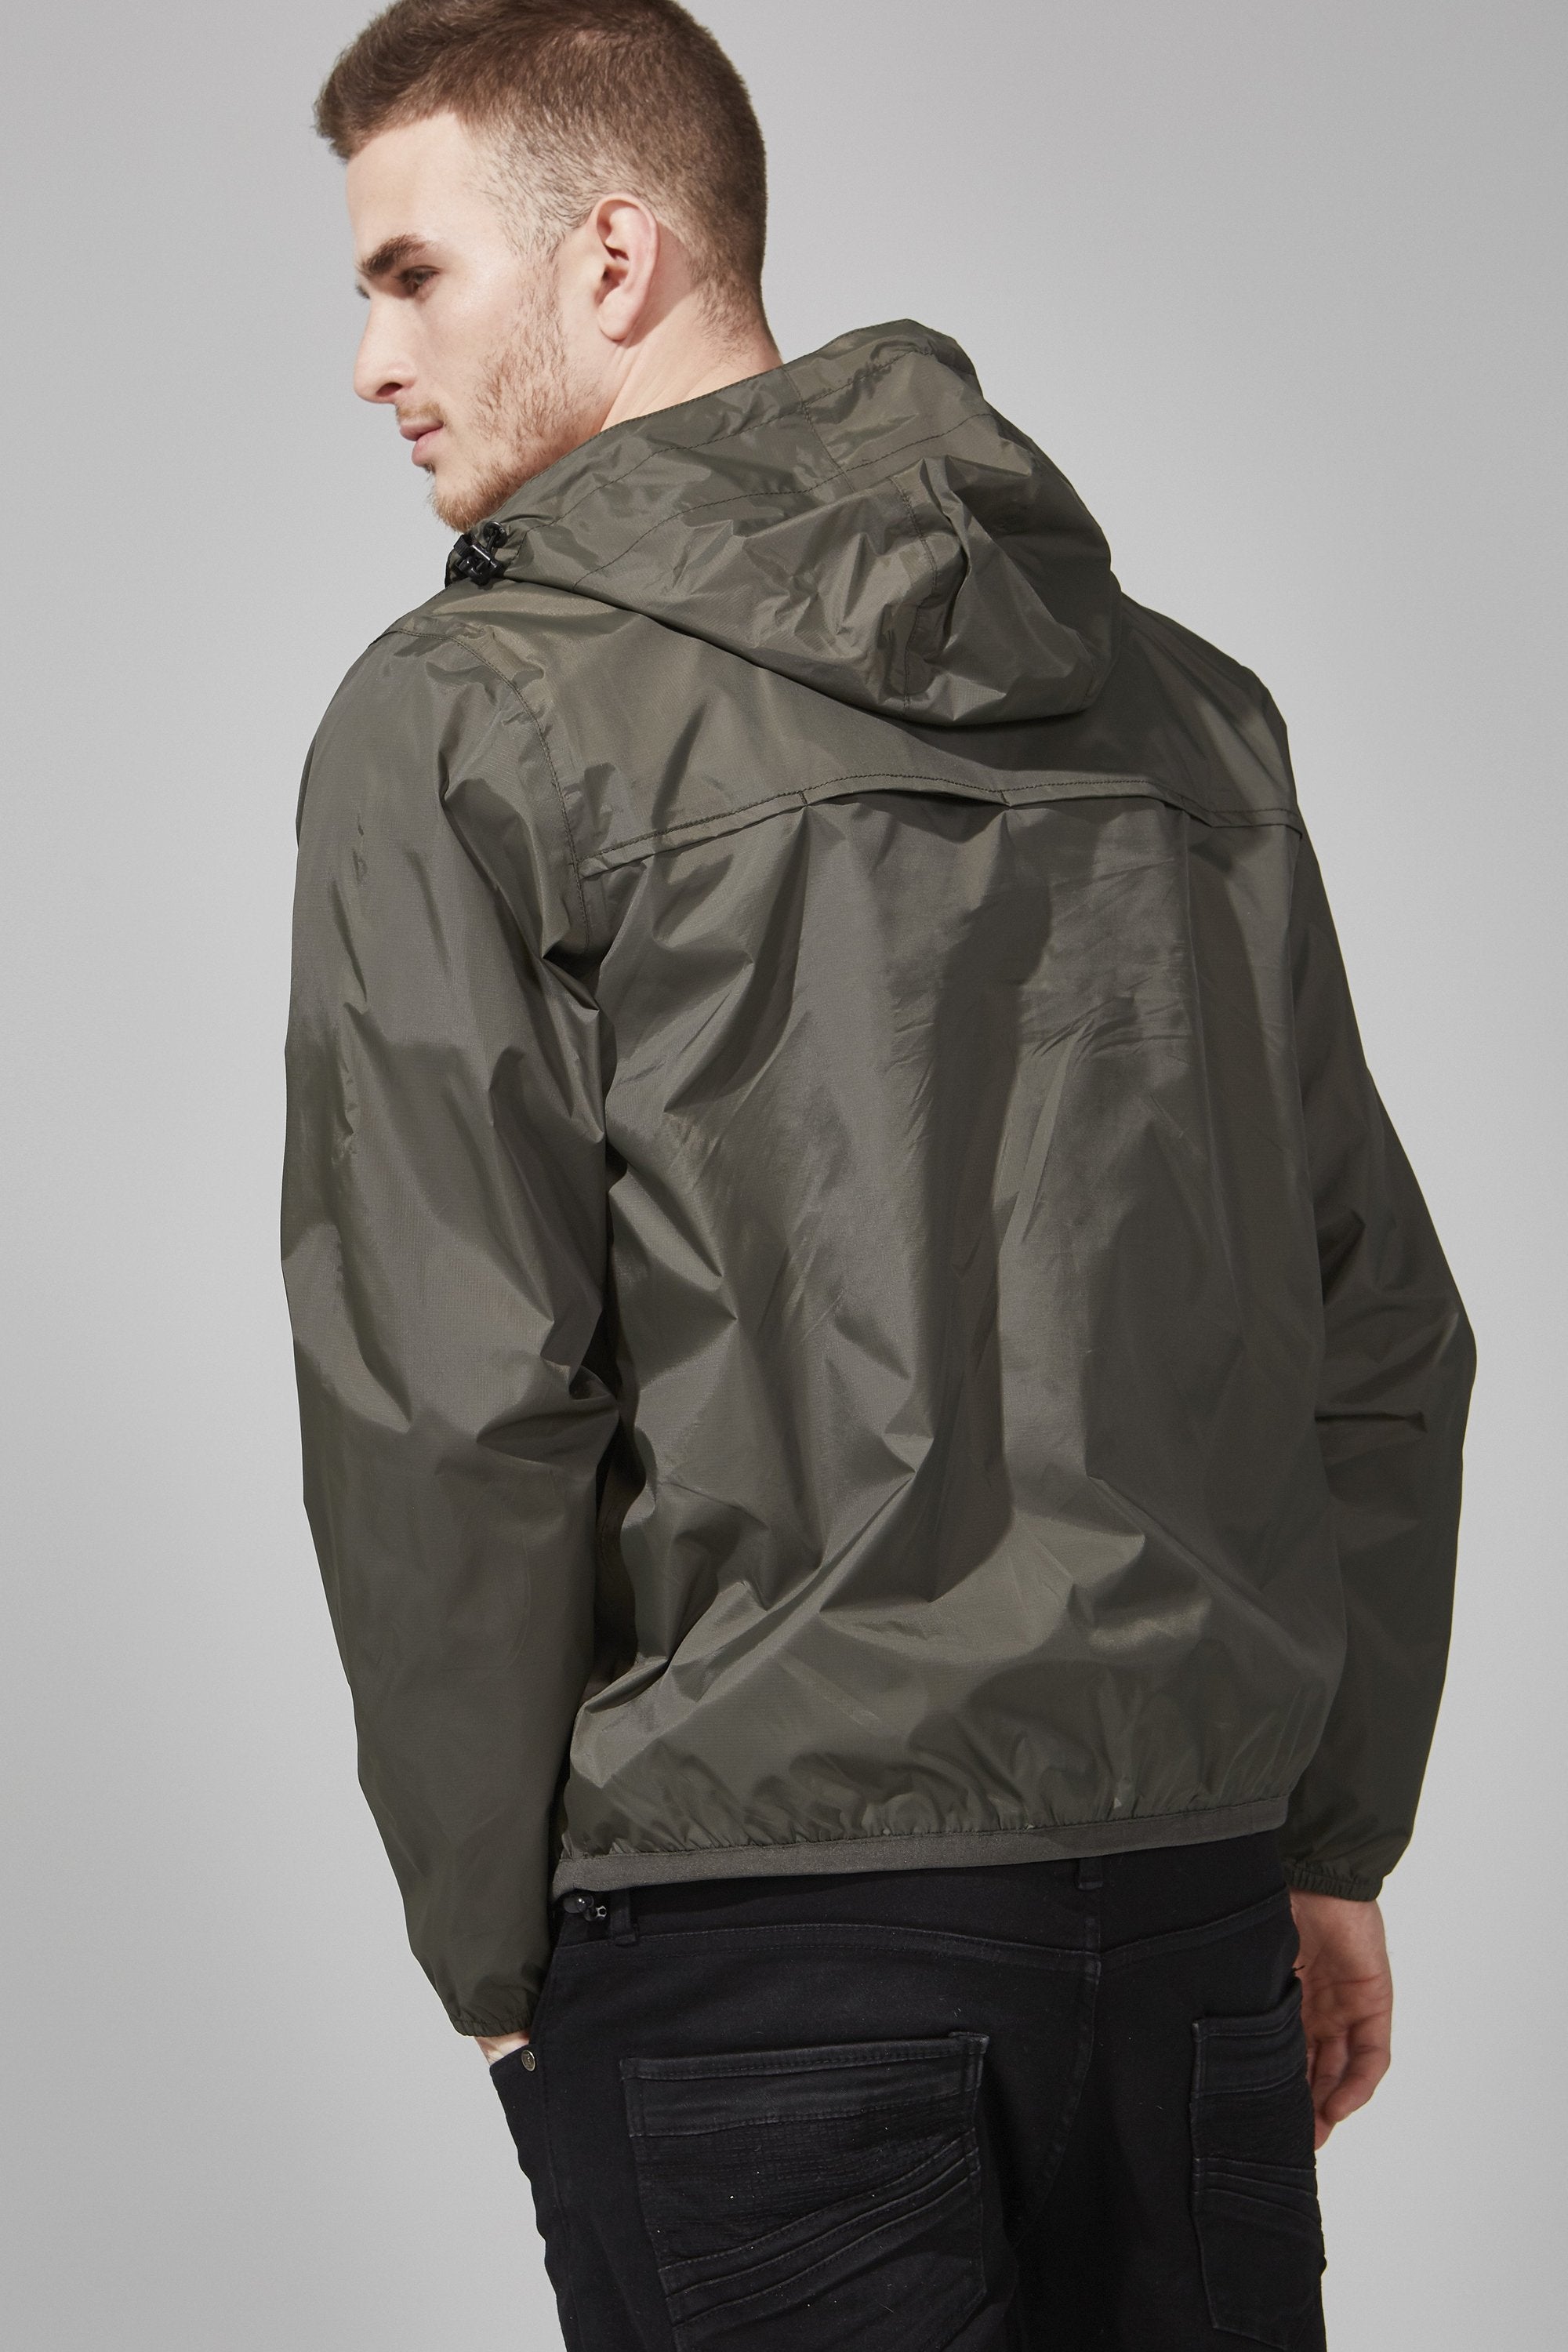 Picture of a Men's Quarter Zip Olive Green Waterproof Rain Jacket back view